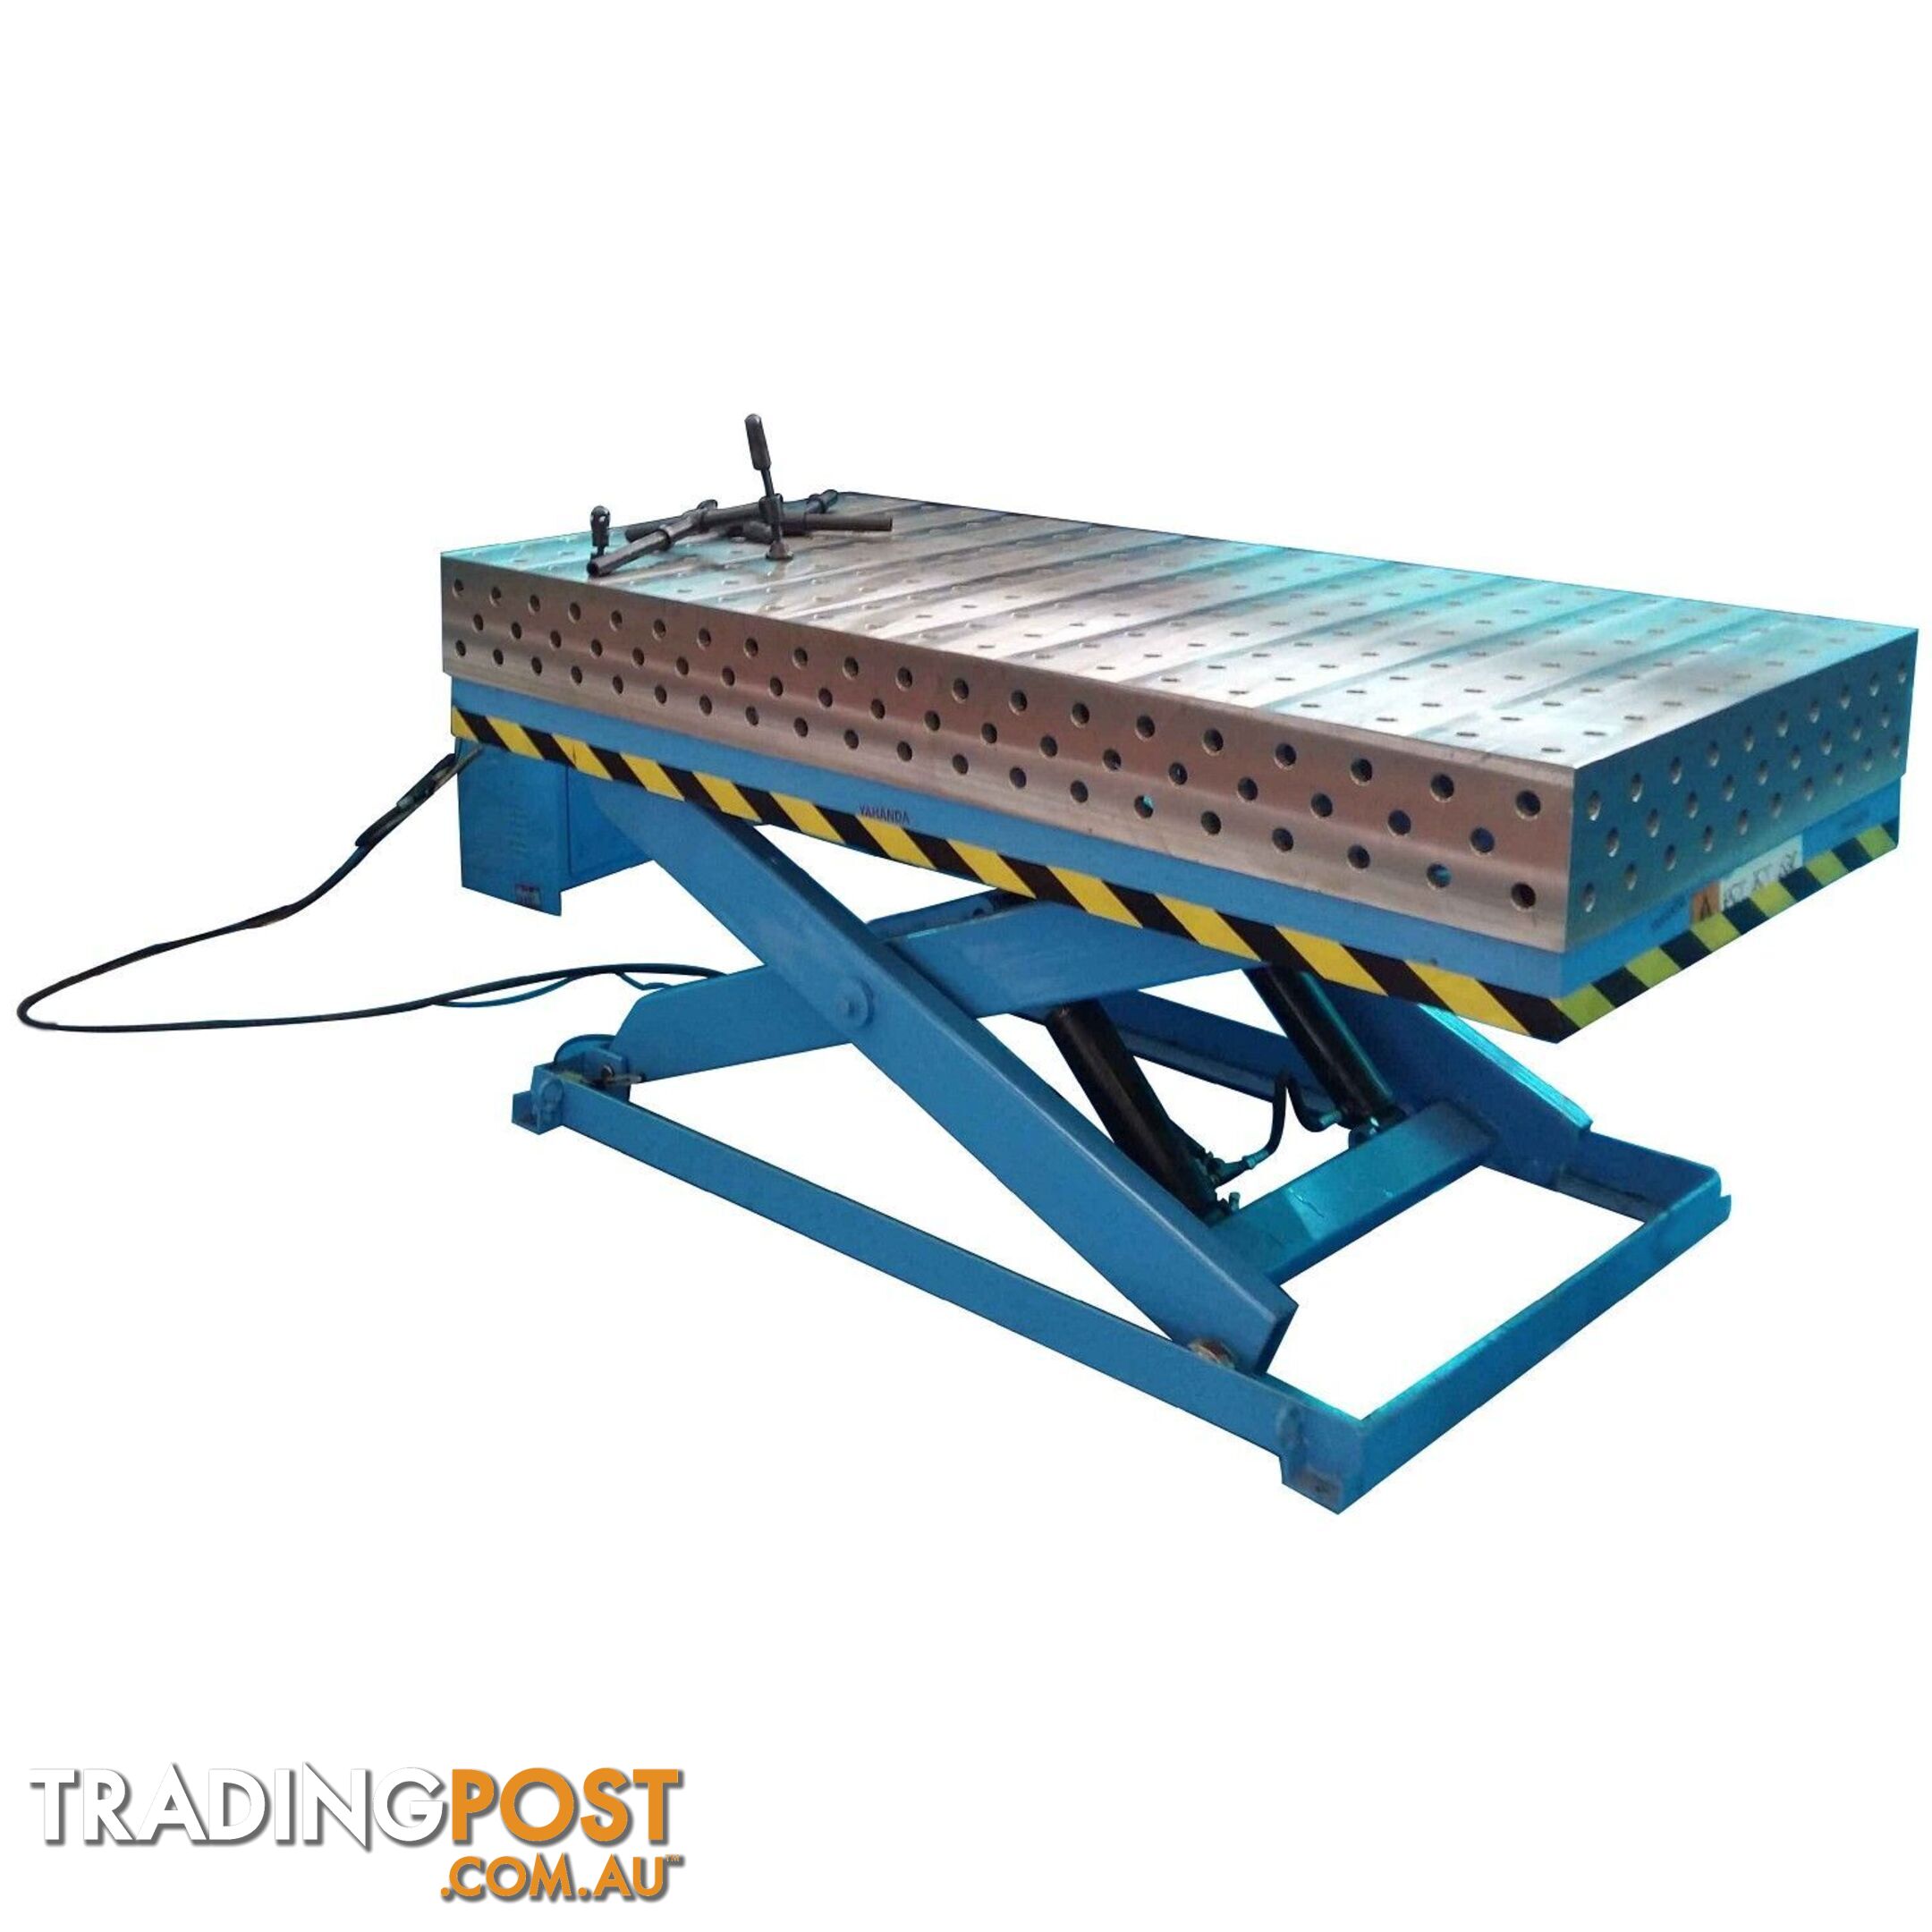 3D Welding Table With Hydraulic Scissor Lift 2000mm X 1000mm X 100mm 16YY2010